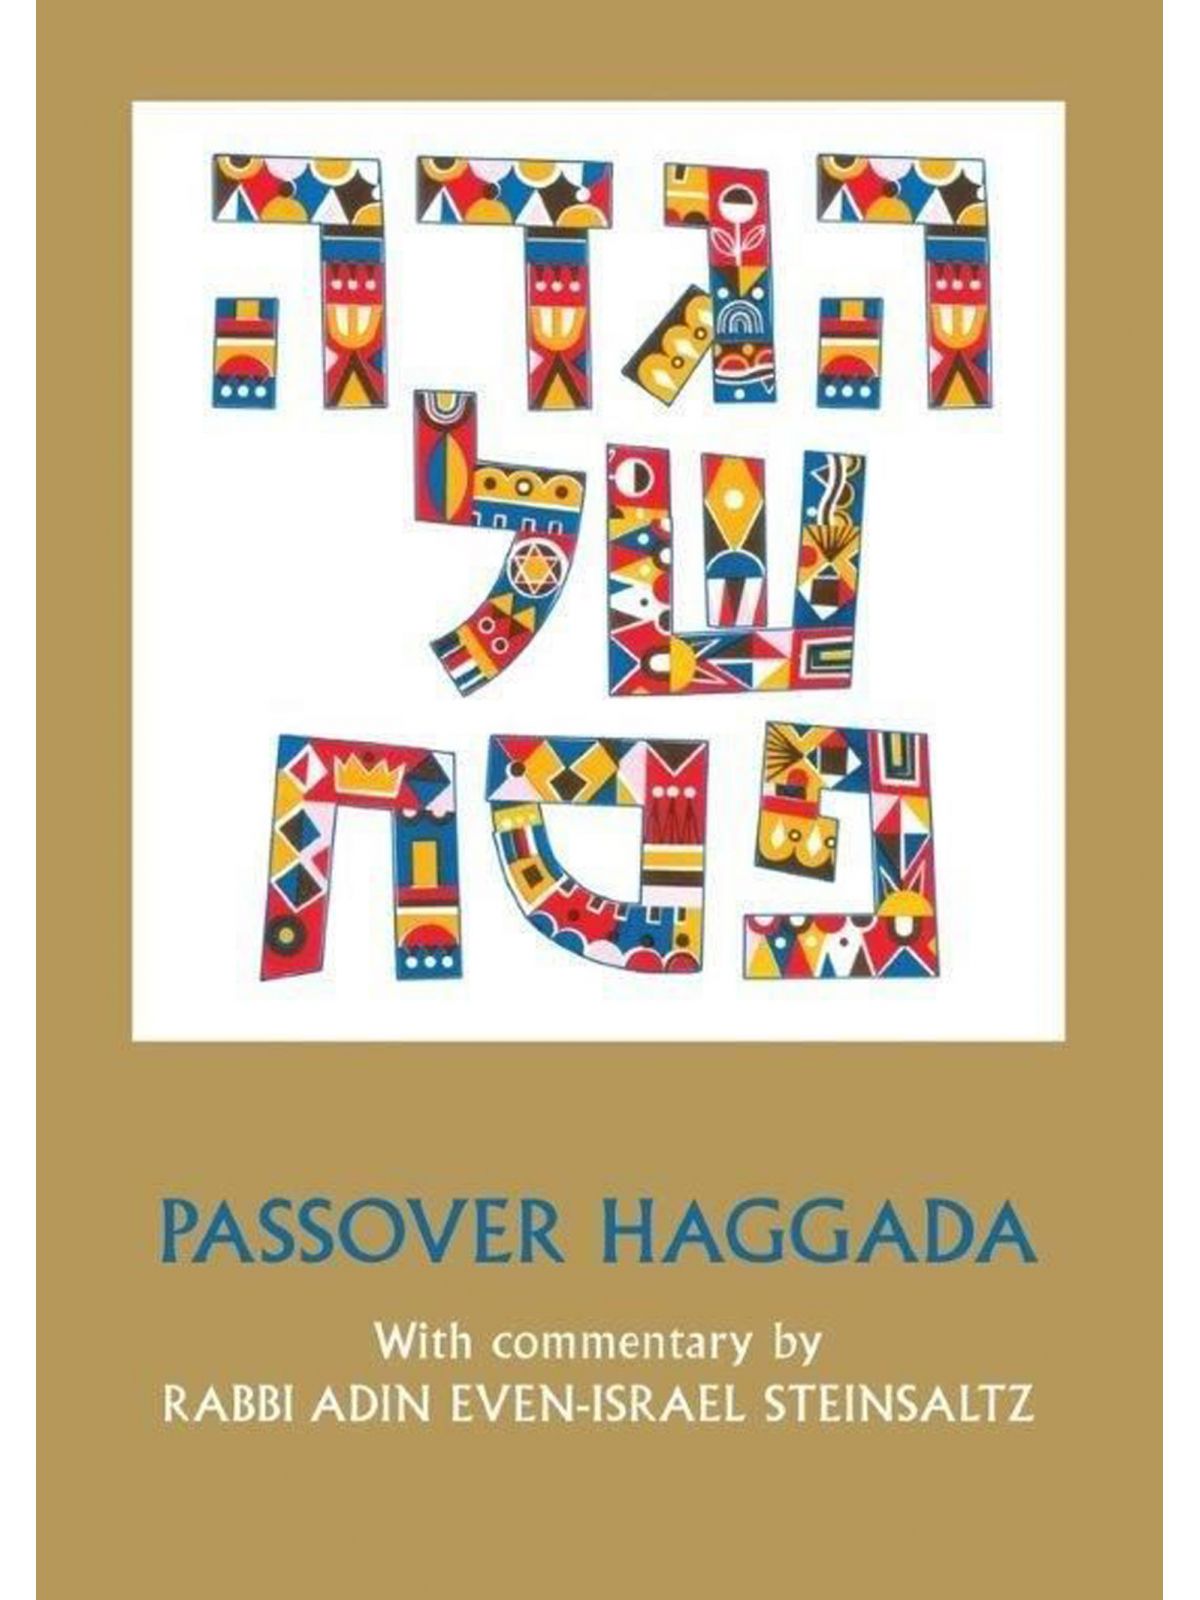 PASSOVER HAGGADA RABBI ADIN EVEN-ISRAEL STEINSALTZ Купить Книгу на Английском